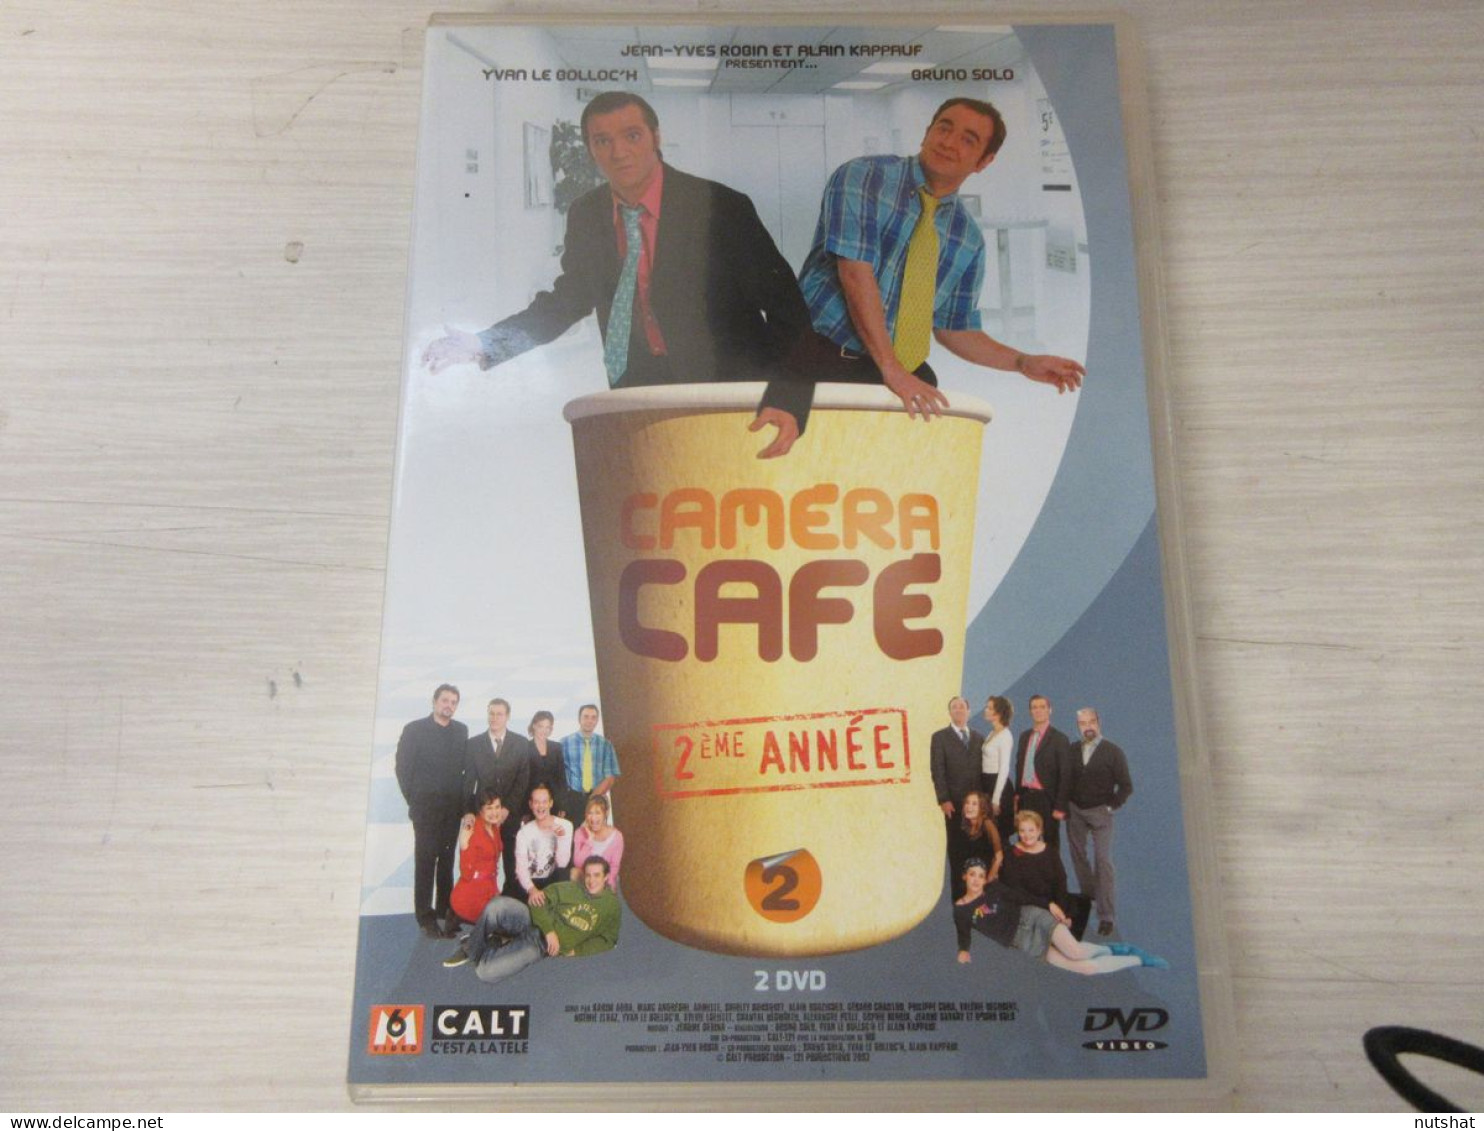 DVD SERIE TV CAMERA CAFE 2eme ANNEE Bruno SOLO Yvan Le BOLLOC'H 2xDVD 2002  - TV-Serien